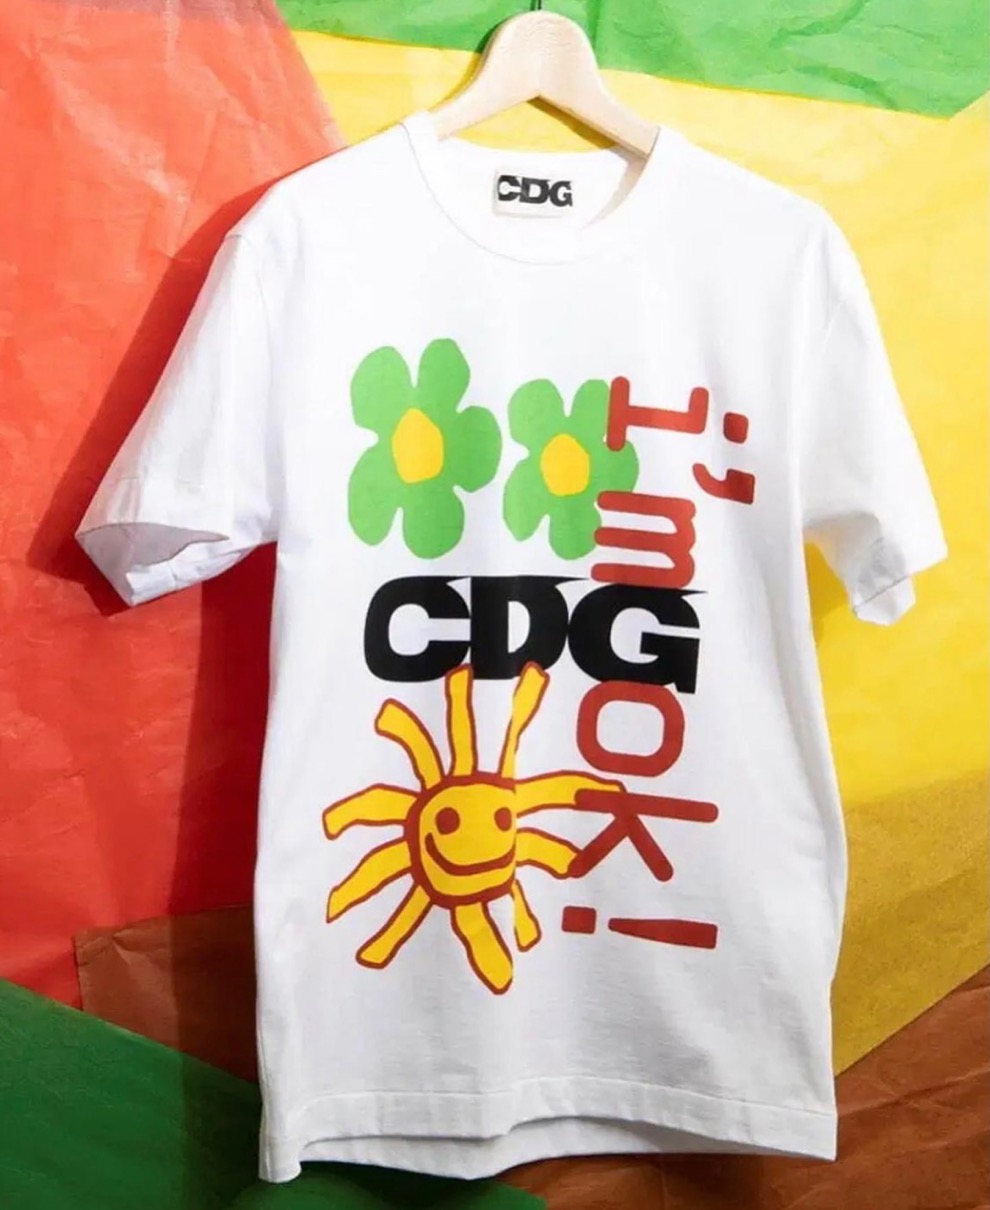 CPFM × CDG】第2弾 新作コラボTシャツが5月7日に発売予定 | UP TO DATE